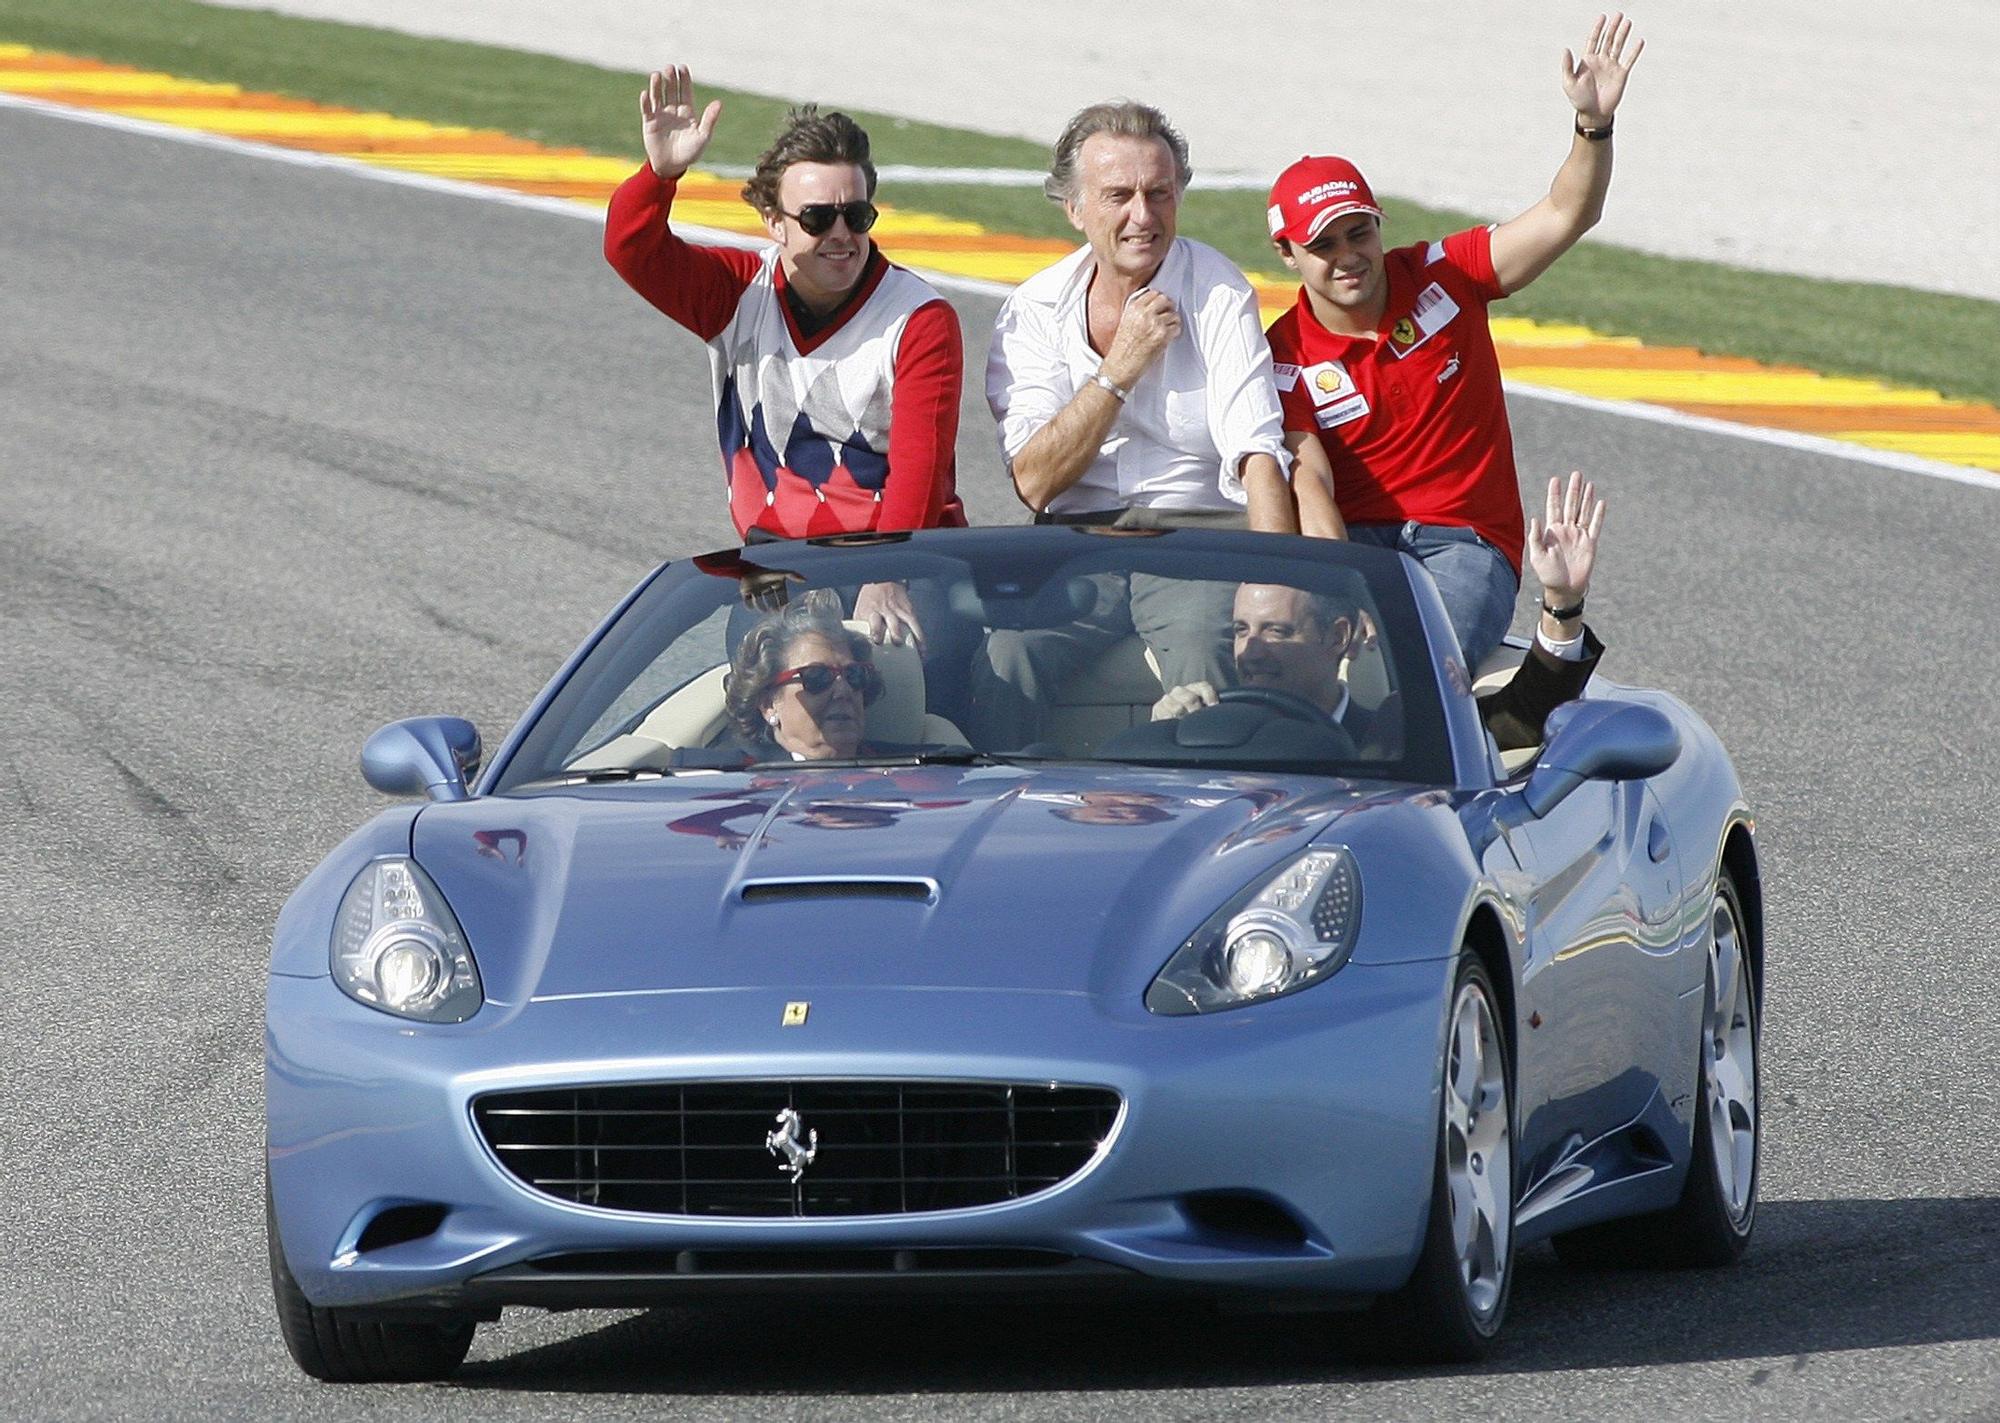 Fernando Alonso, Felipe Massa, Luca Cordero di Montezemolo, Rita Barberá y Francisco Camps durante un evento de Ferrari en el circuito de Cheste en 2009.